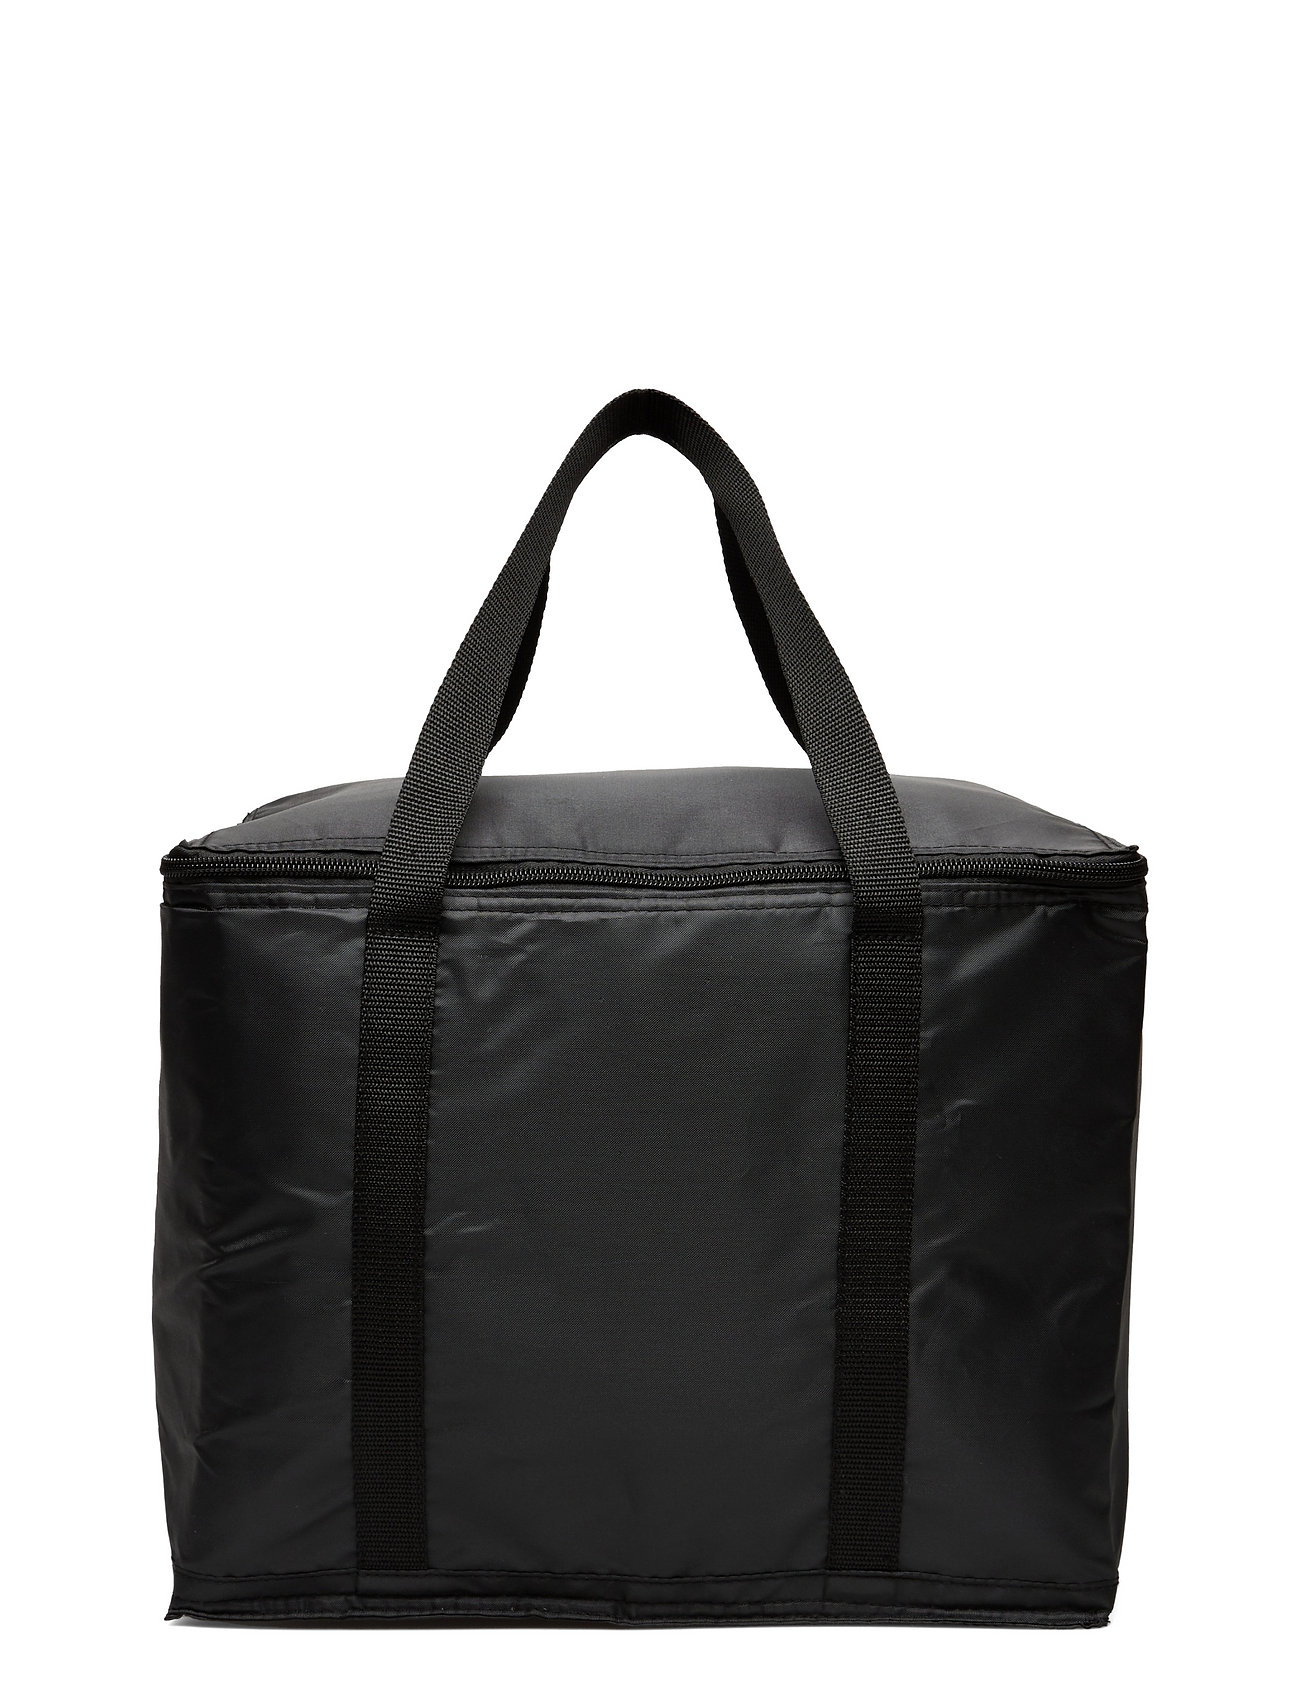 Jens Kylväska Stor Home Outdoor Environment Cooling Bags & Picnic Baskets Black Sagaform